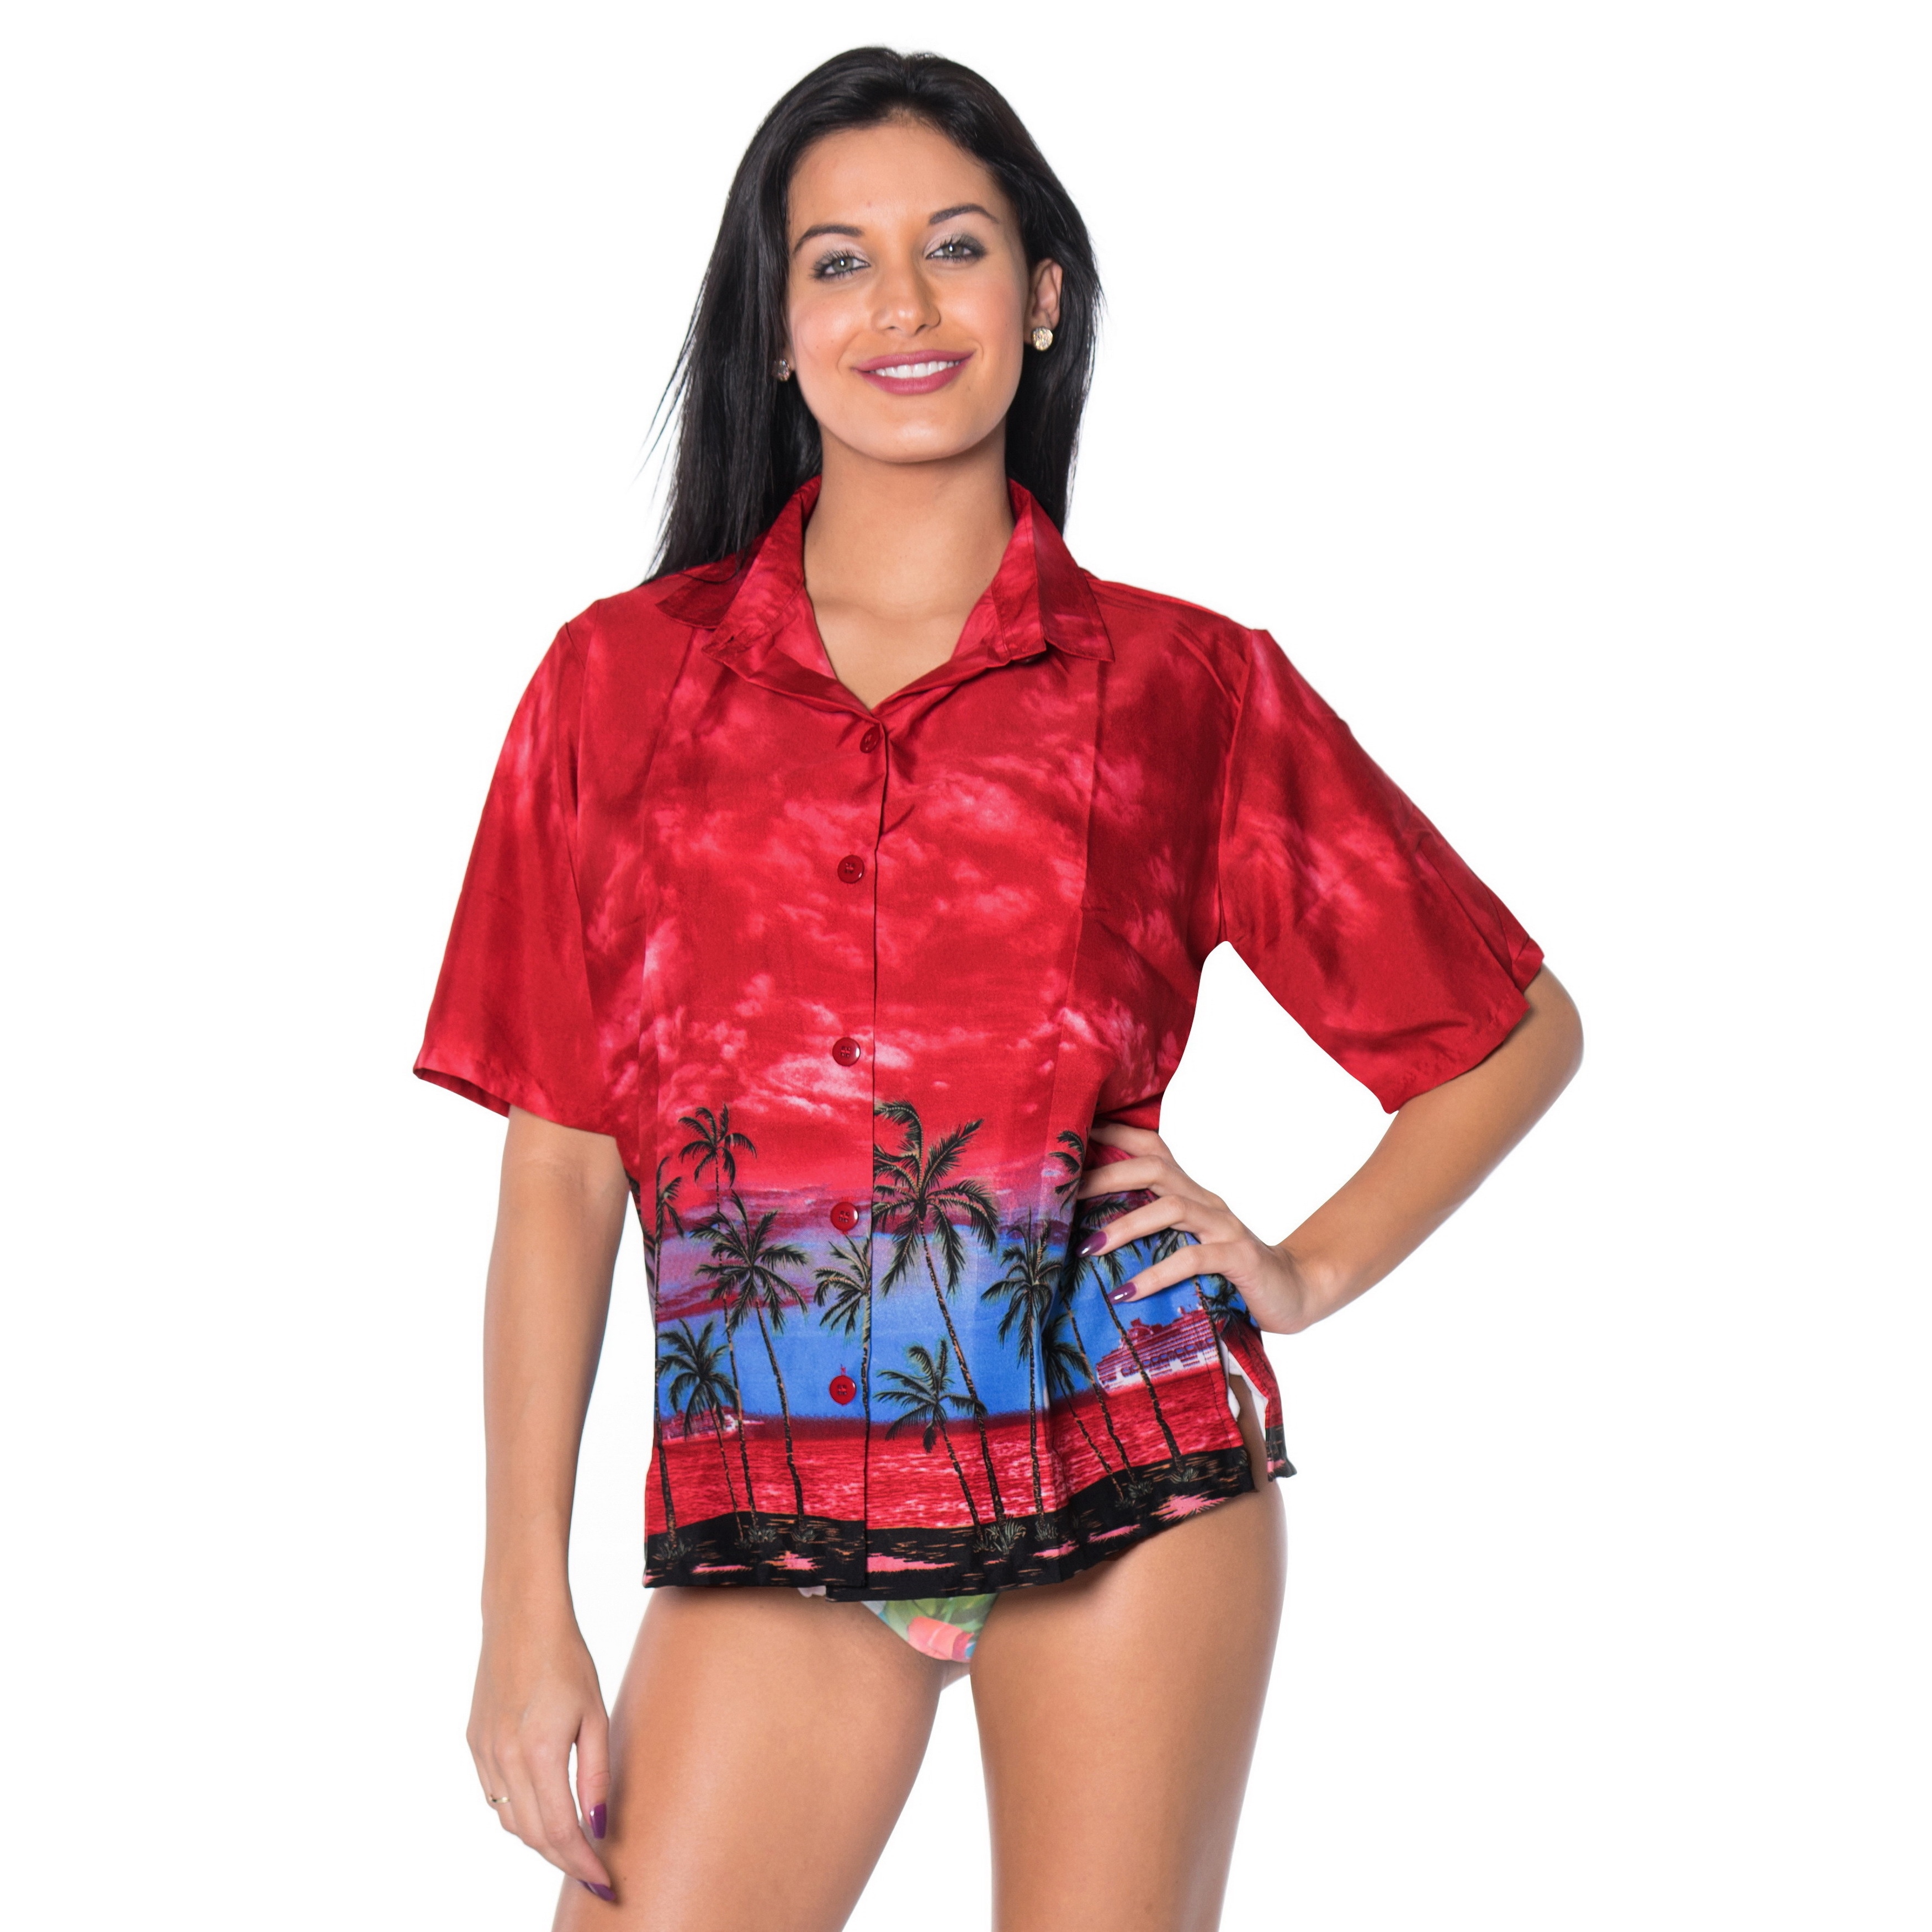 red hawaiian shirt womens